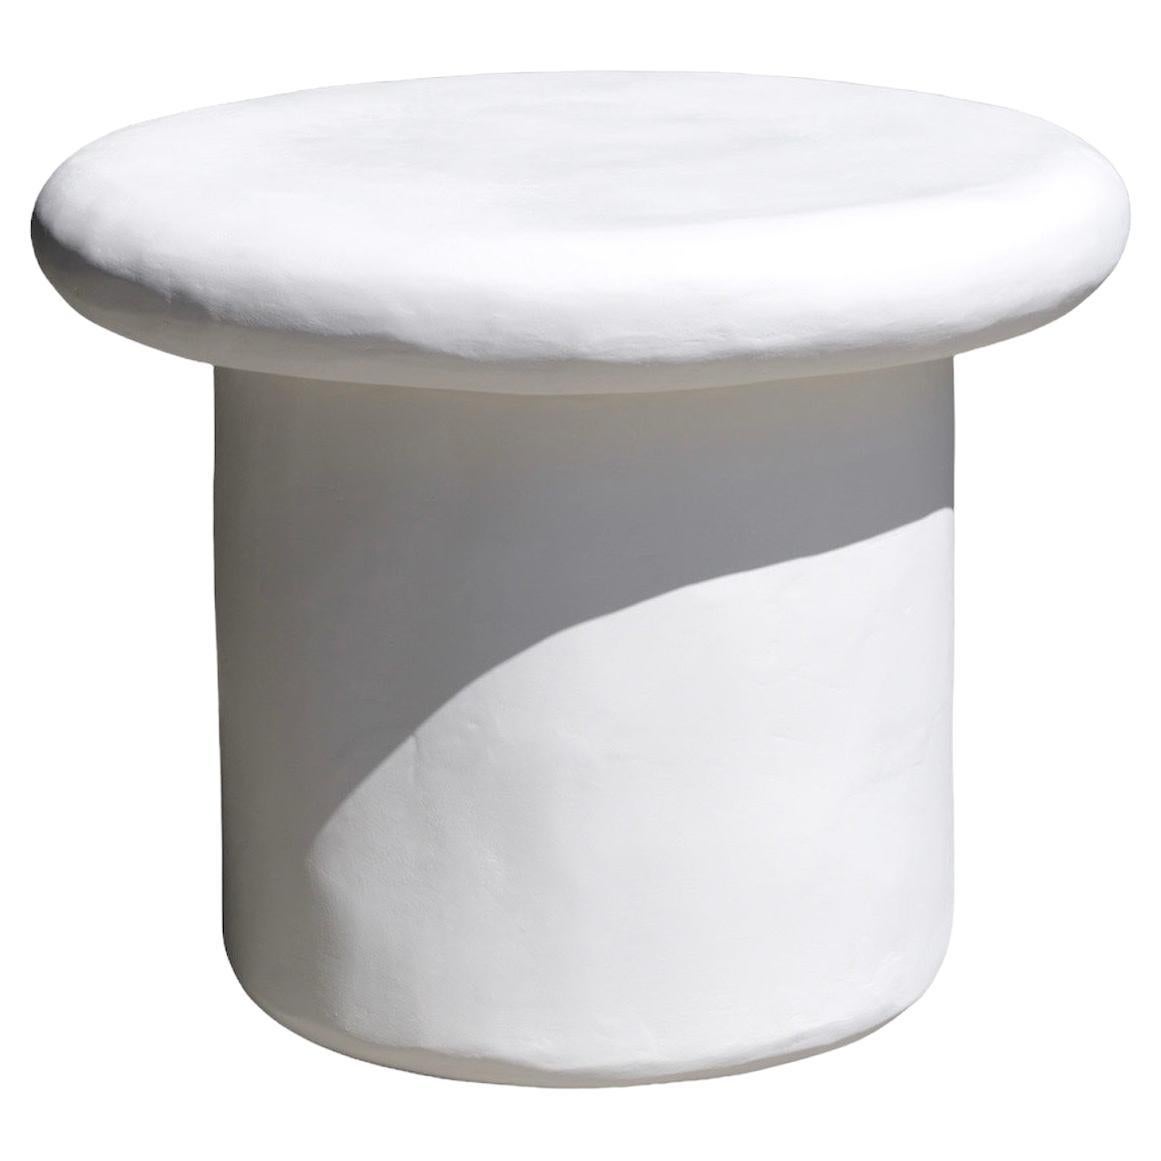 alba round plaster table by öken house studios For Sale